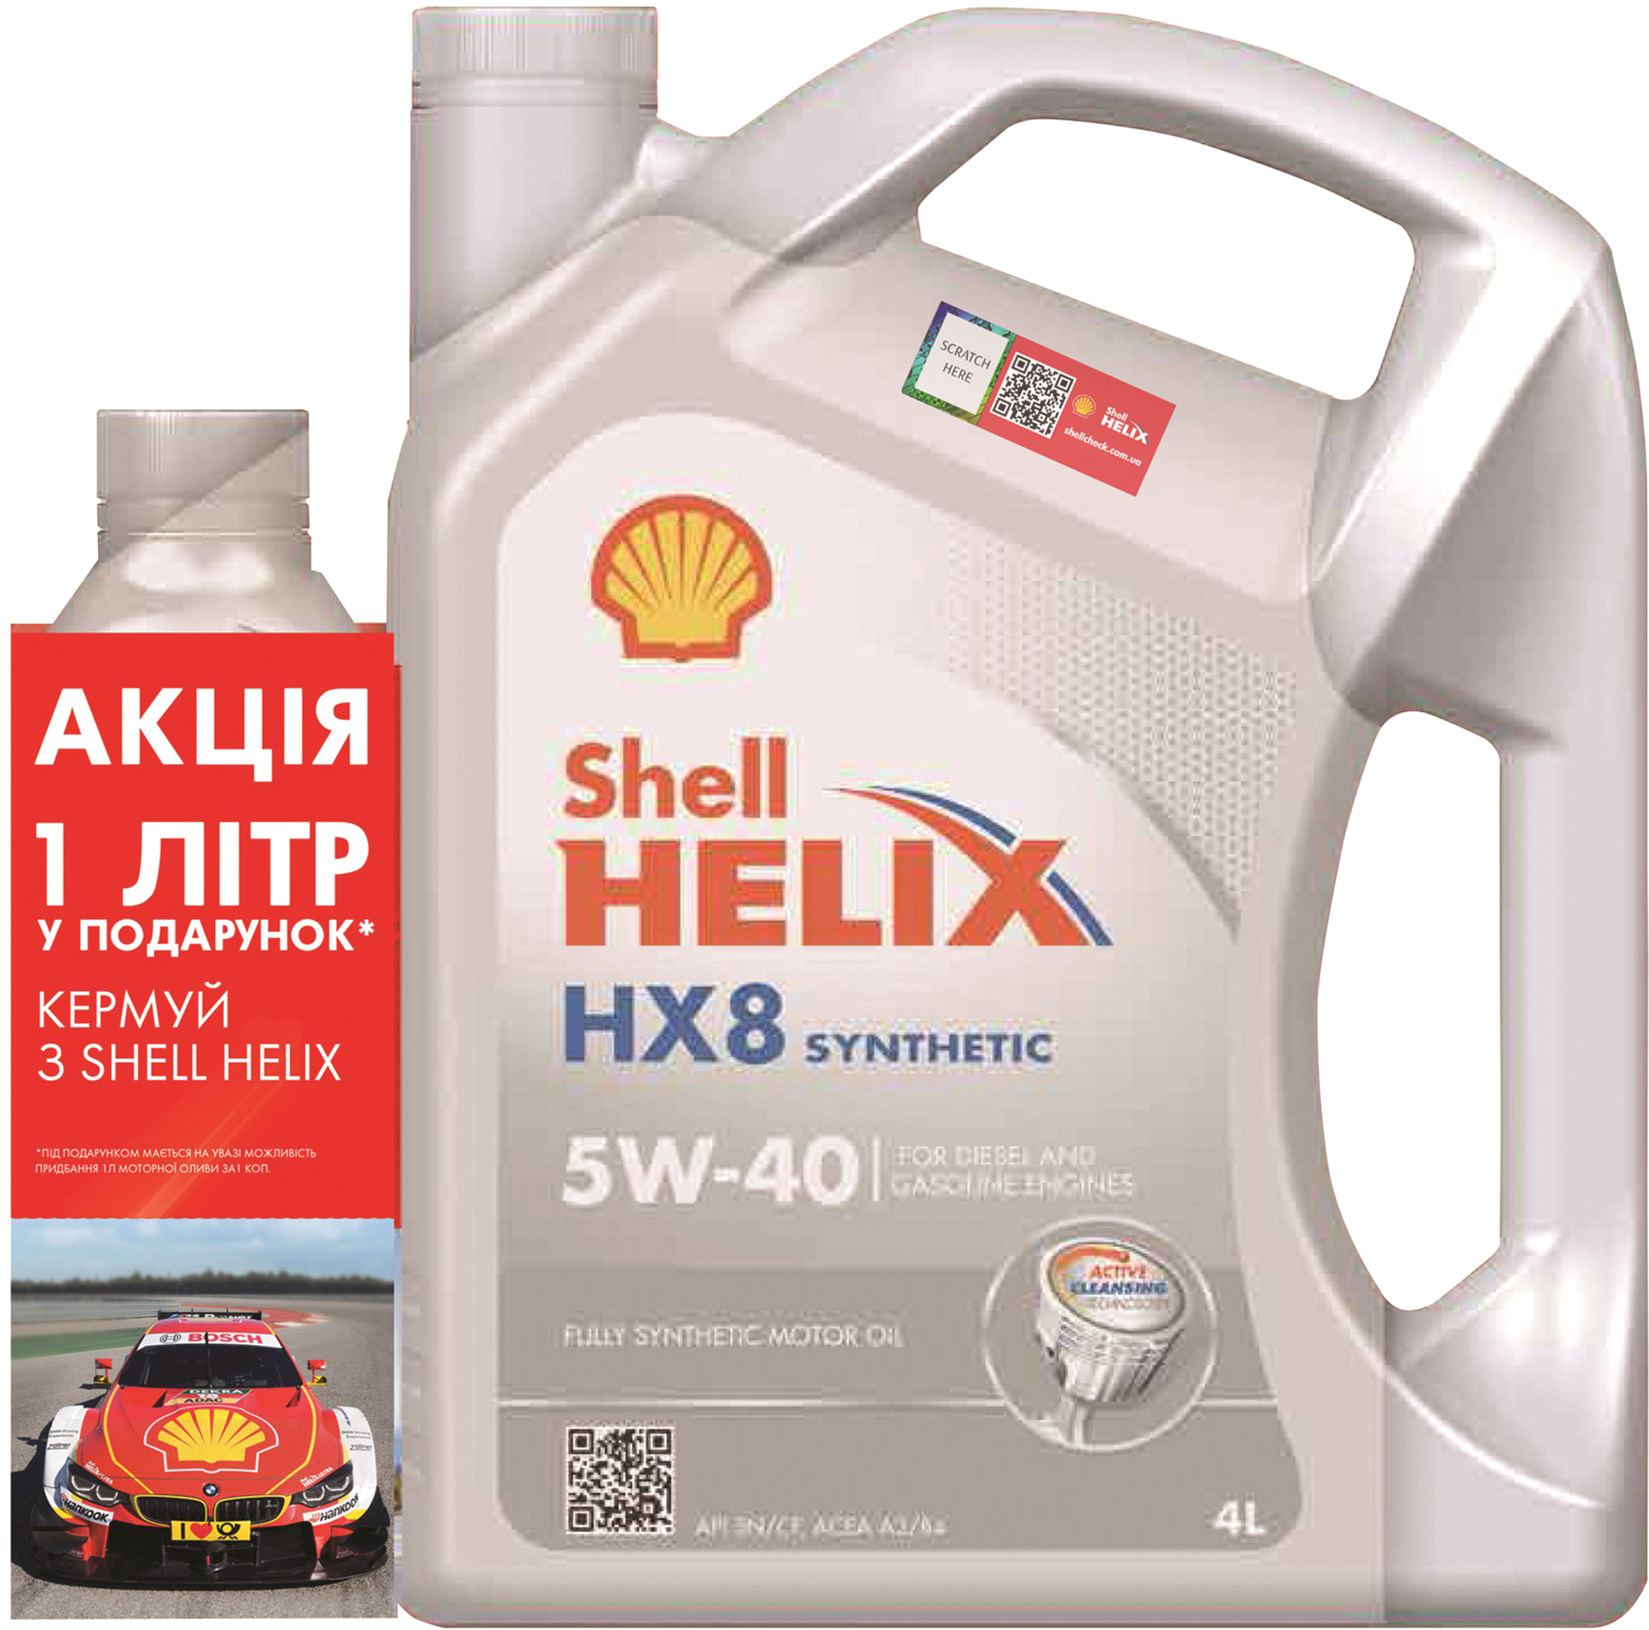 Shell helix 5w 40 купить. Helix hx8 Synthetic 5w-40 1л.